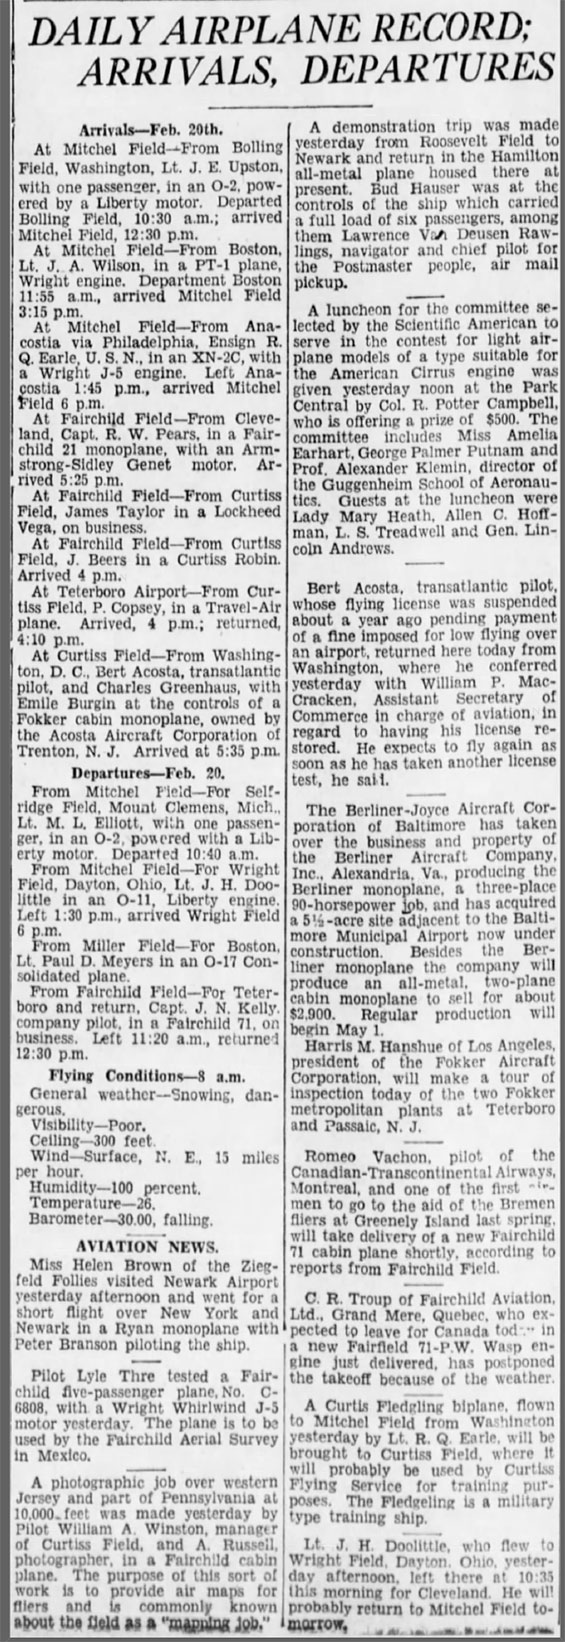 Brooklyn Daily Eagle (NY), February 21, 1929 (Source: newspapers.com)